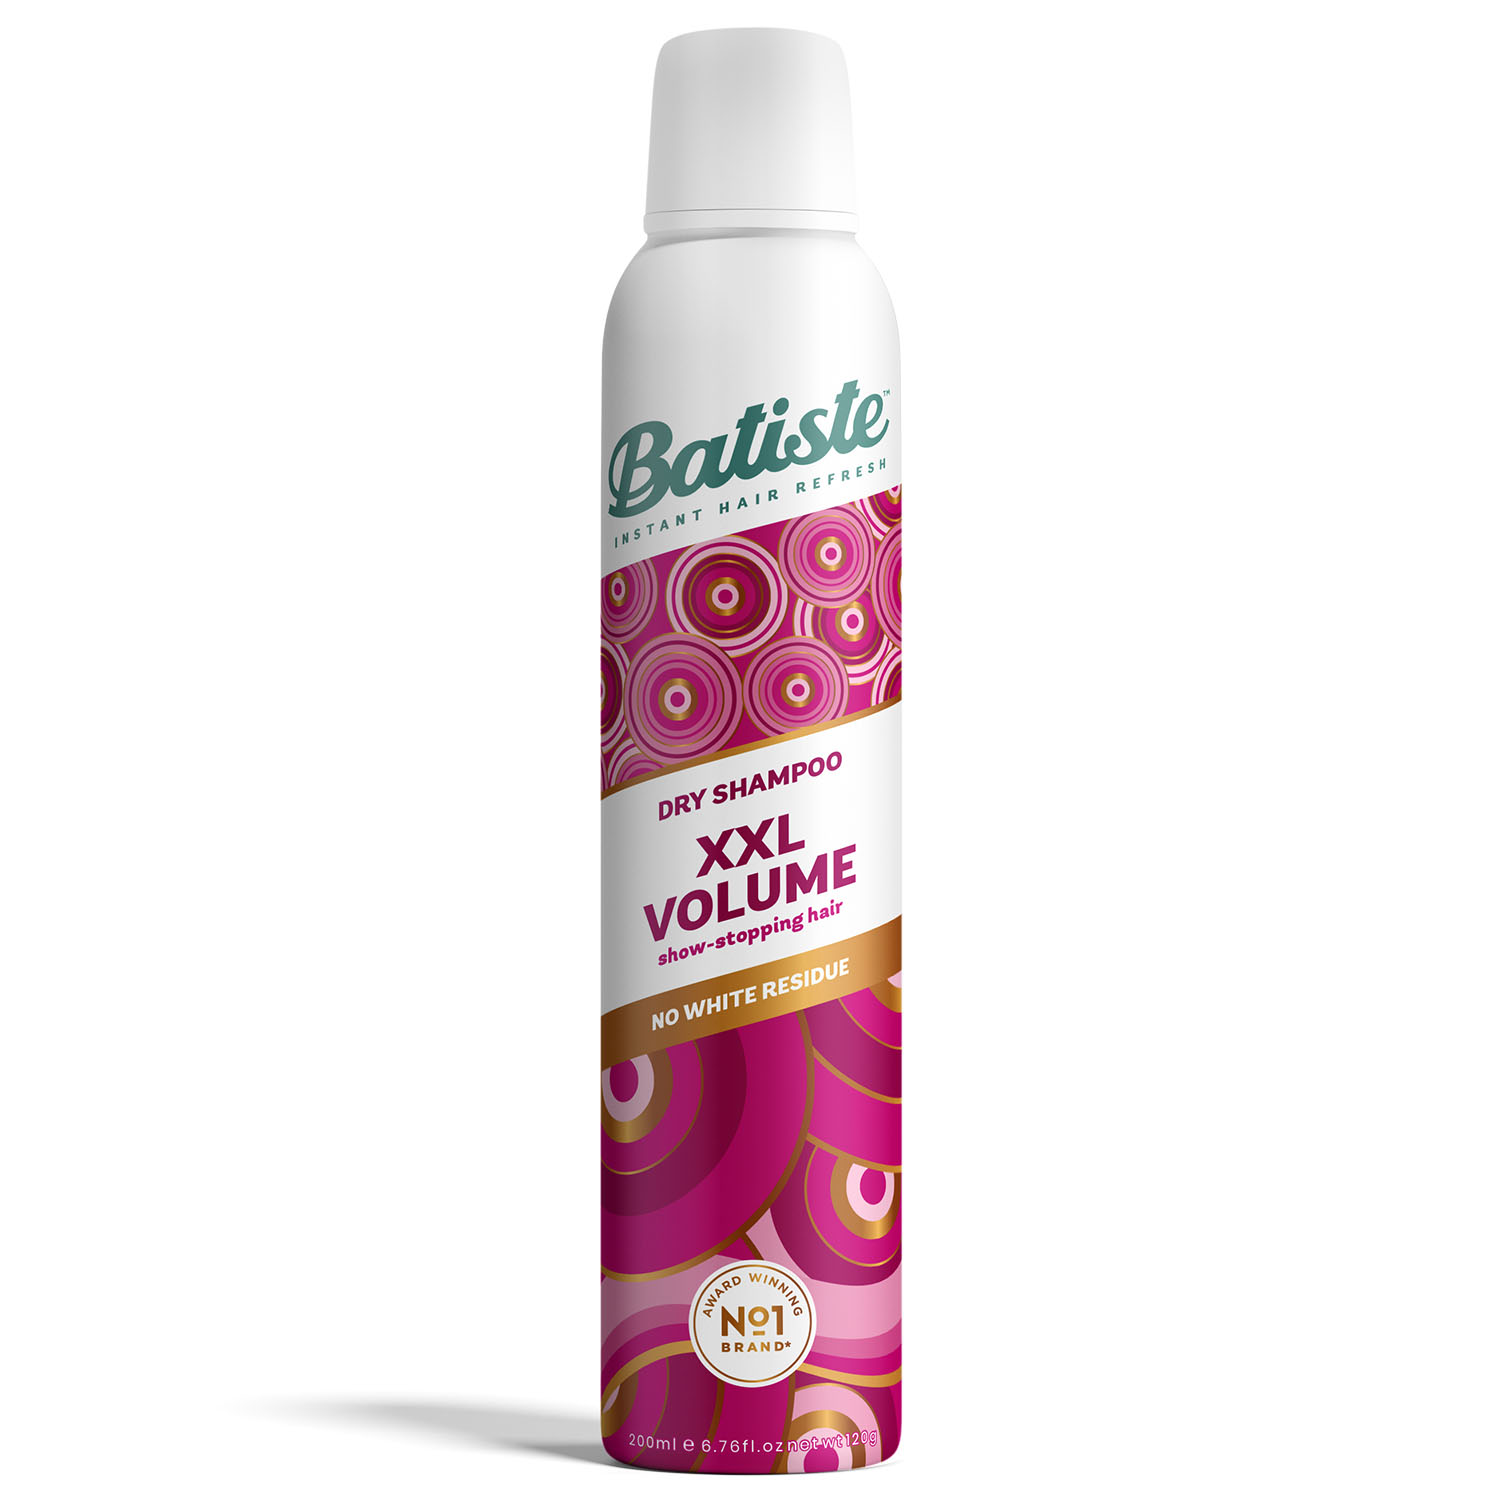 Batiste Спрей для экстра объема волос XXL Volume Spray, 200 мл (Batiste, Stylist) цена и фото